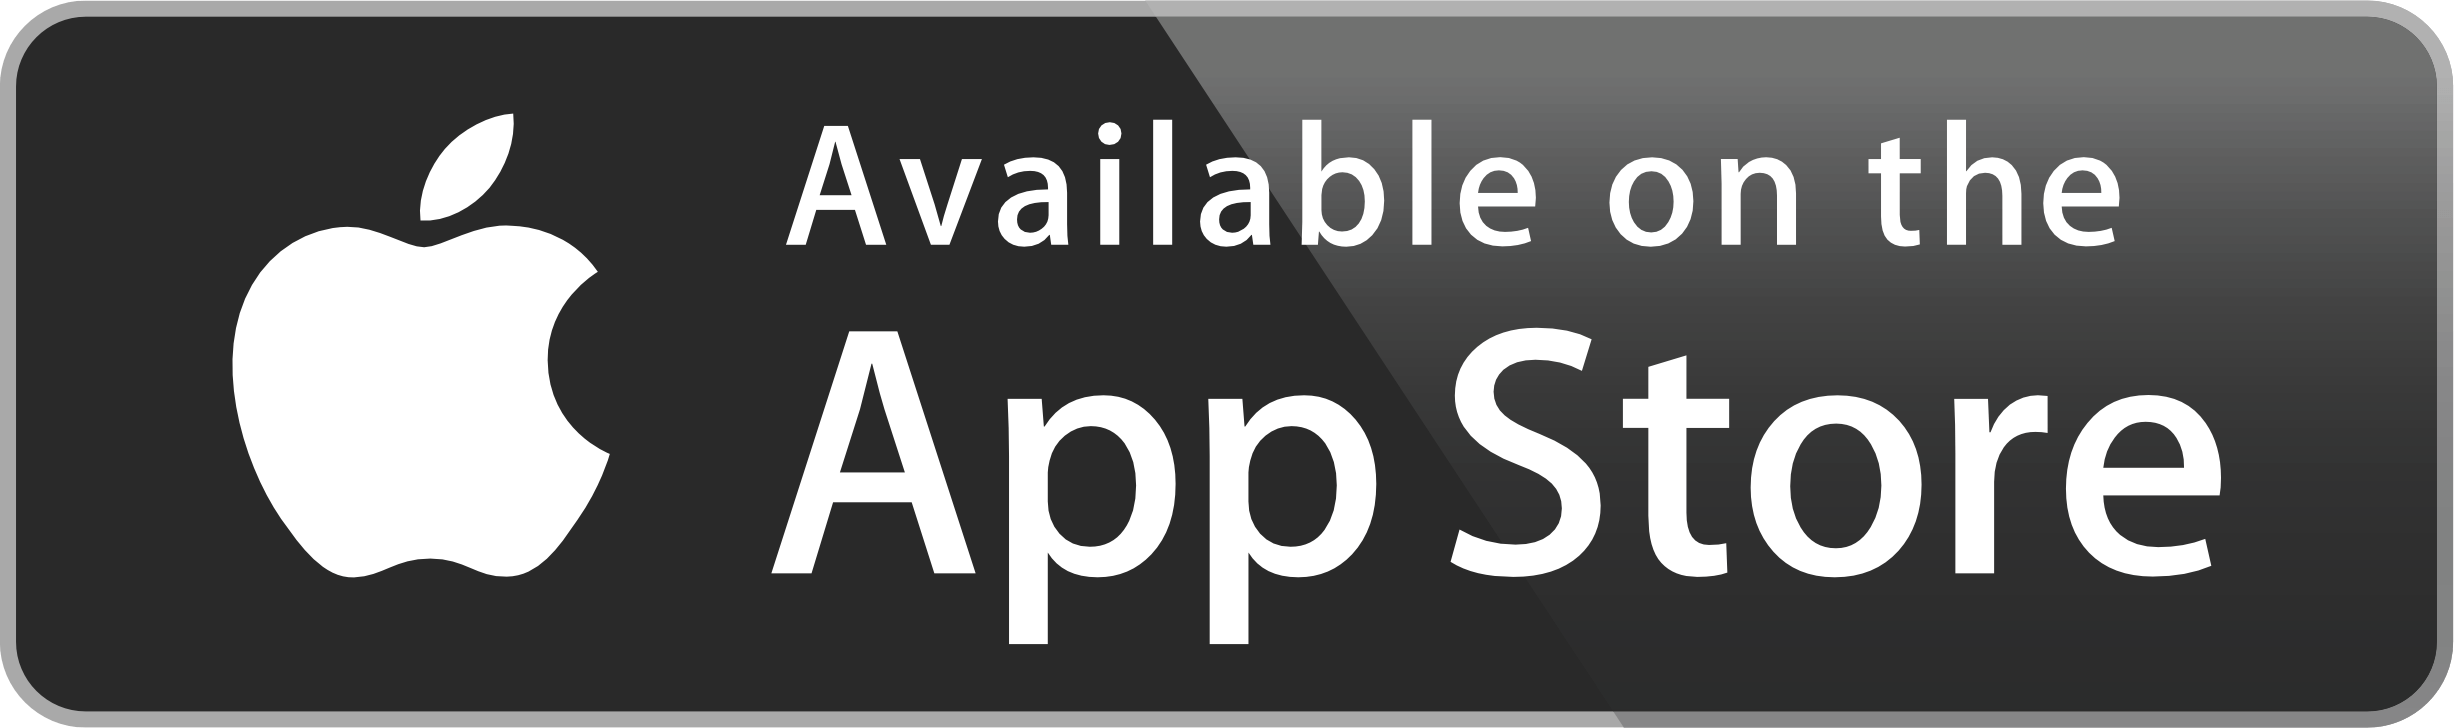 Zoom App Store